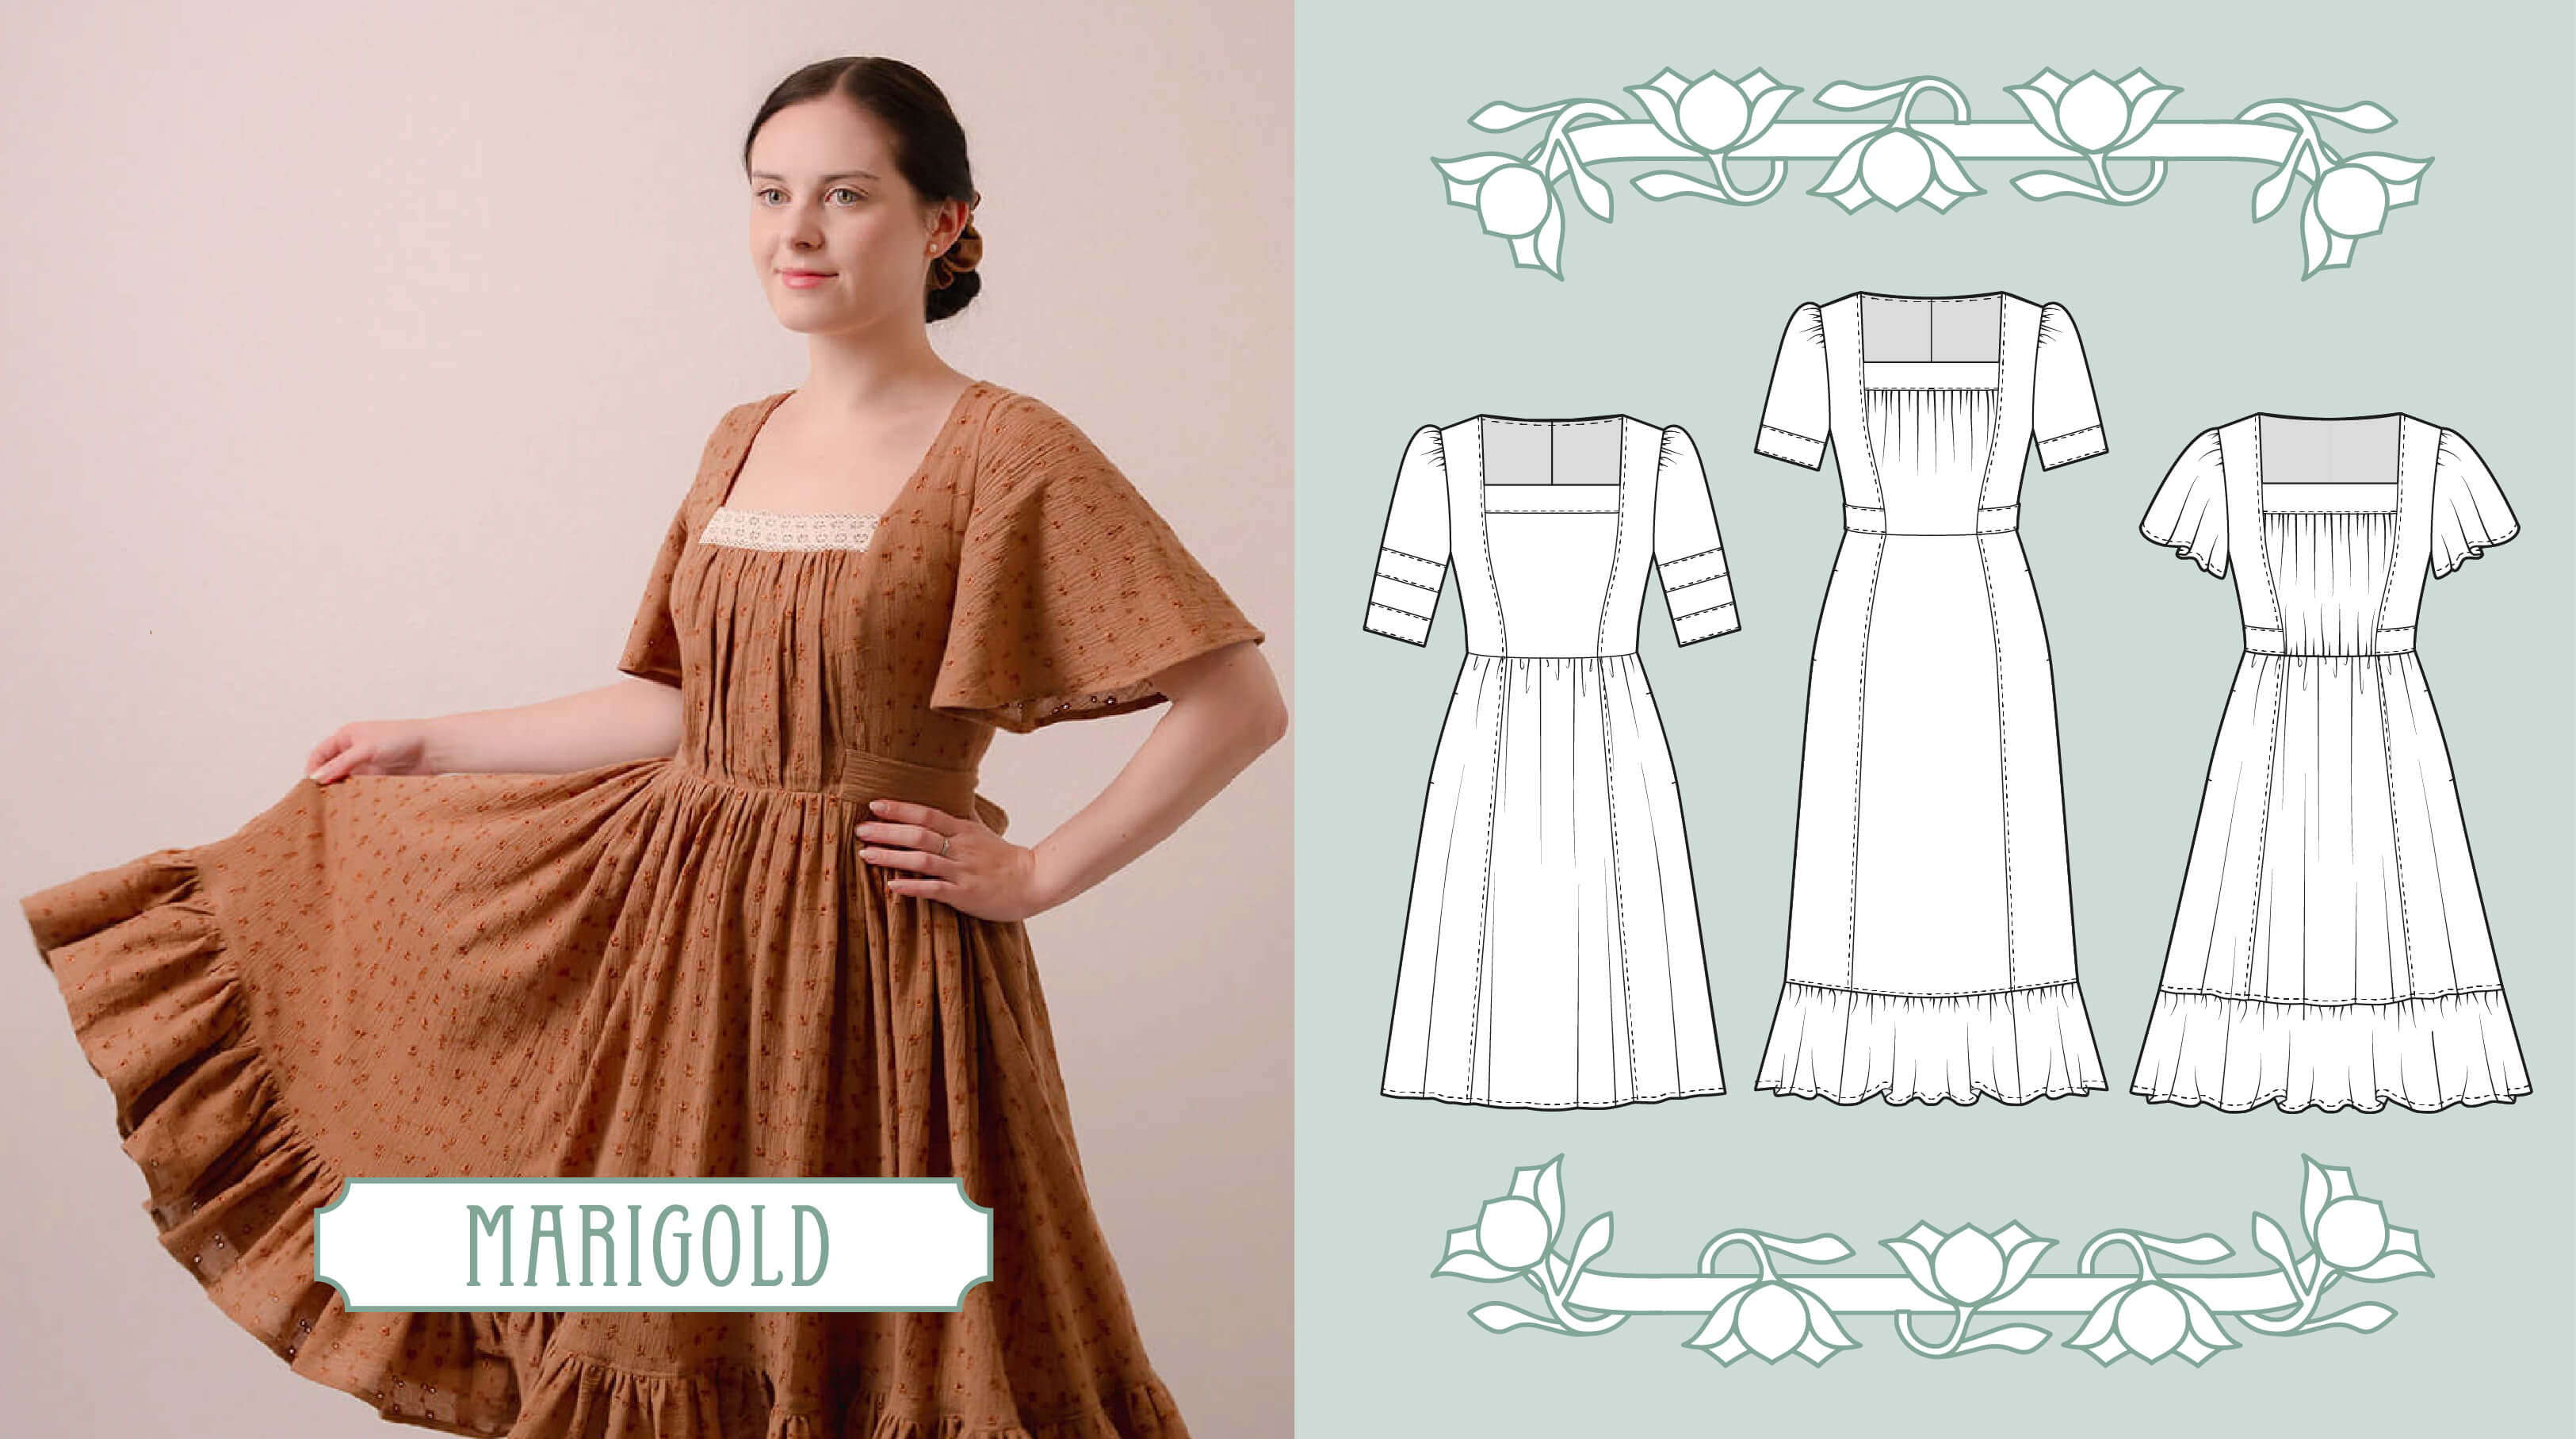 Meet Marigold - our ladylike cottagecore dress